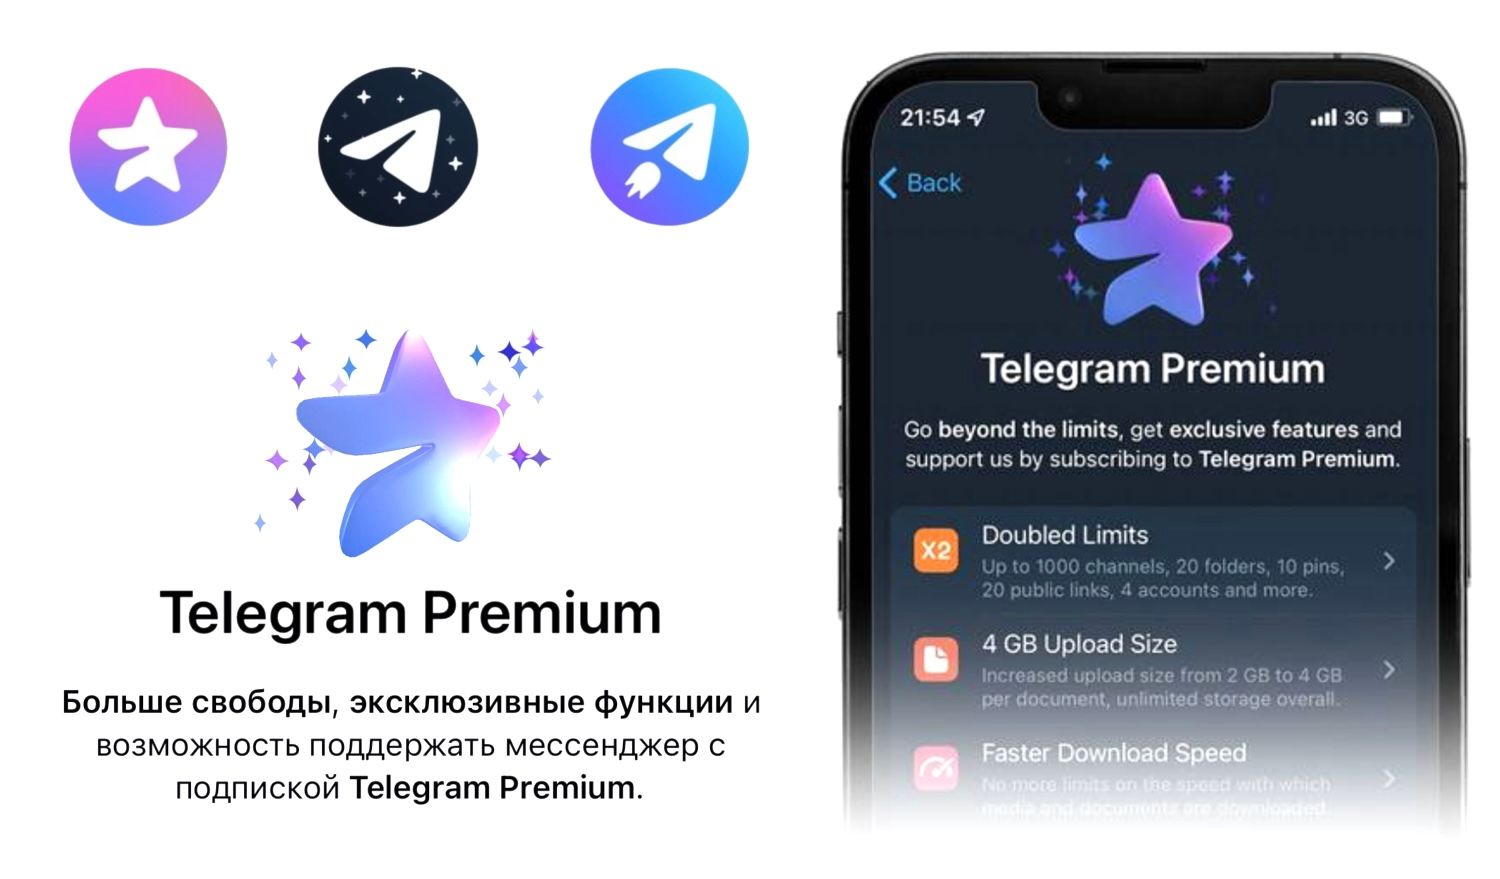 Купить телеграм премиум за тон. Премиум подписка телеграм. Телеграм премиум значок. Звездочка телеграмм премиум. Telegram Premium Premium.